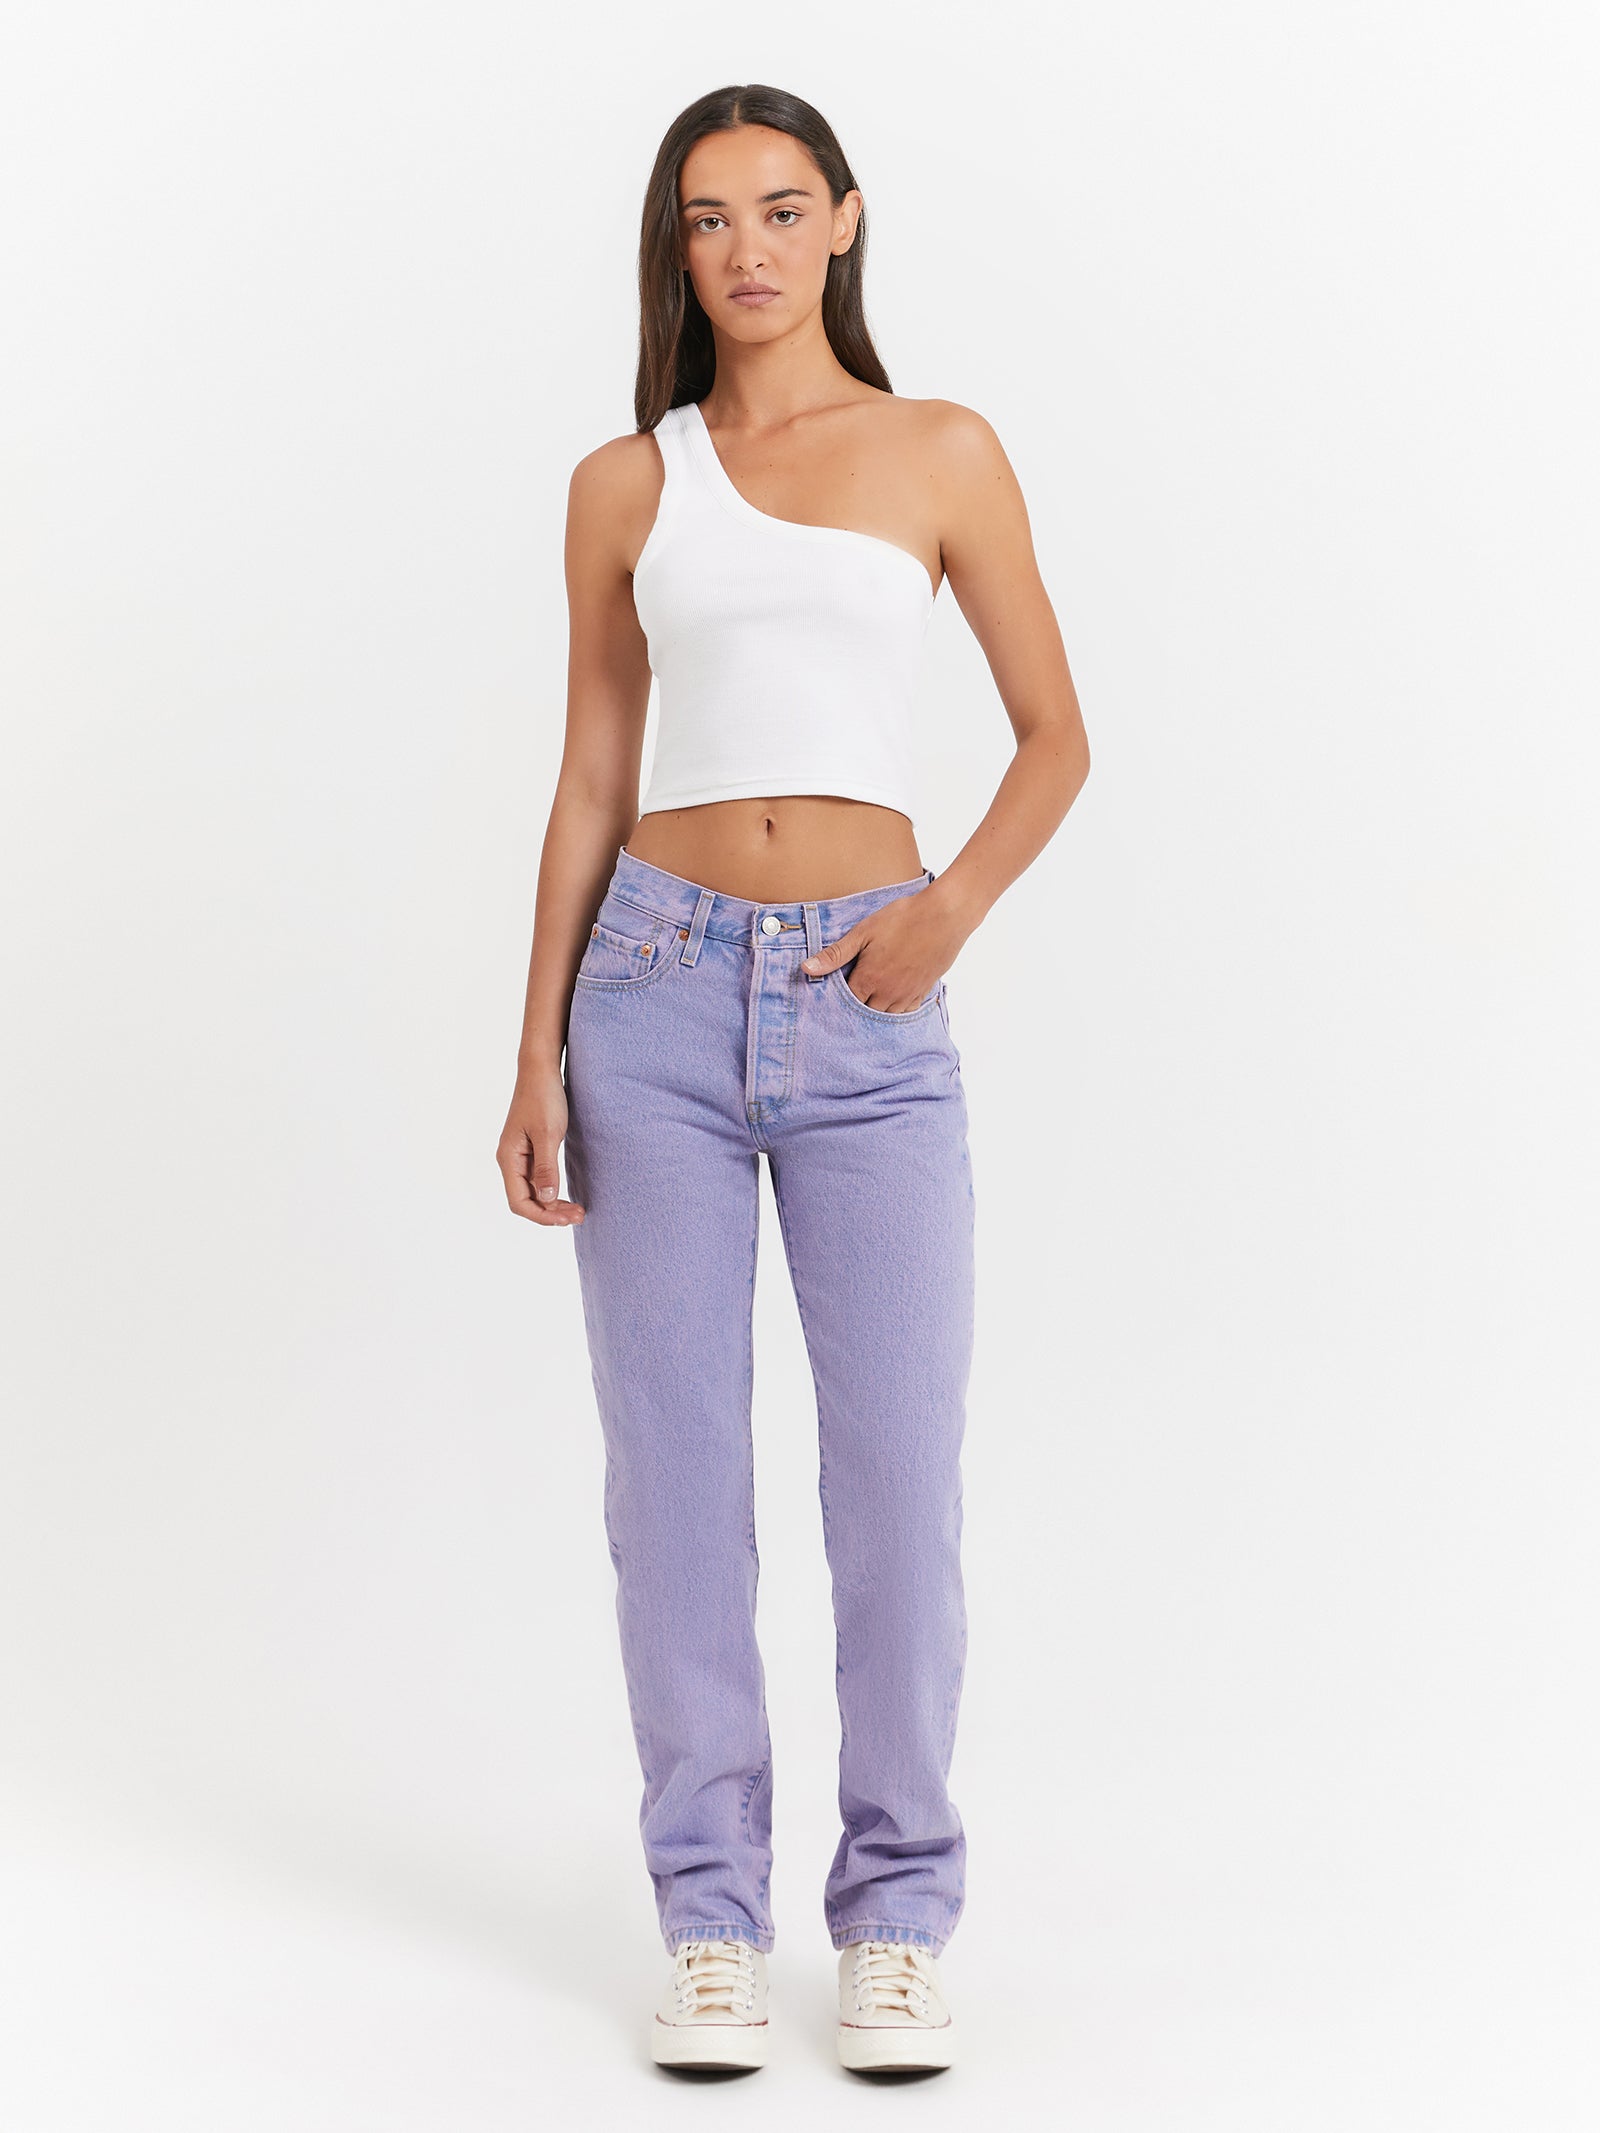 501 Jeans in Chroma Acid Purple